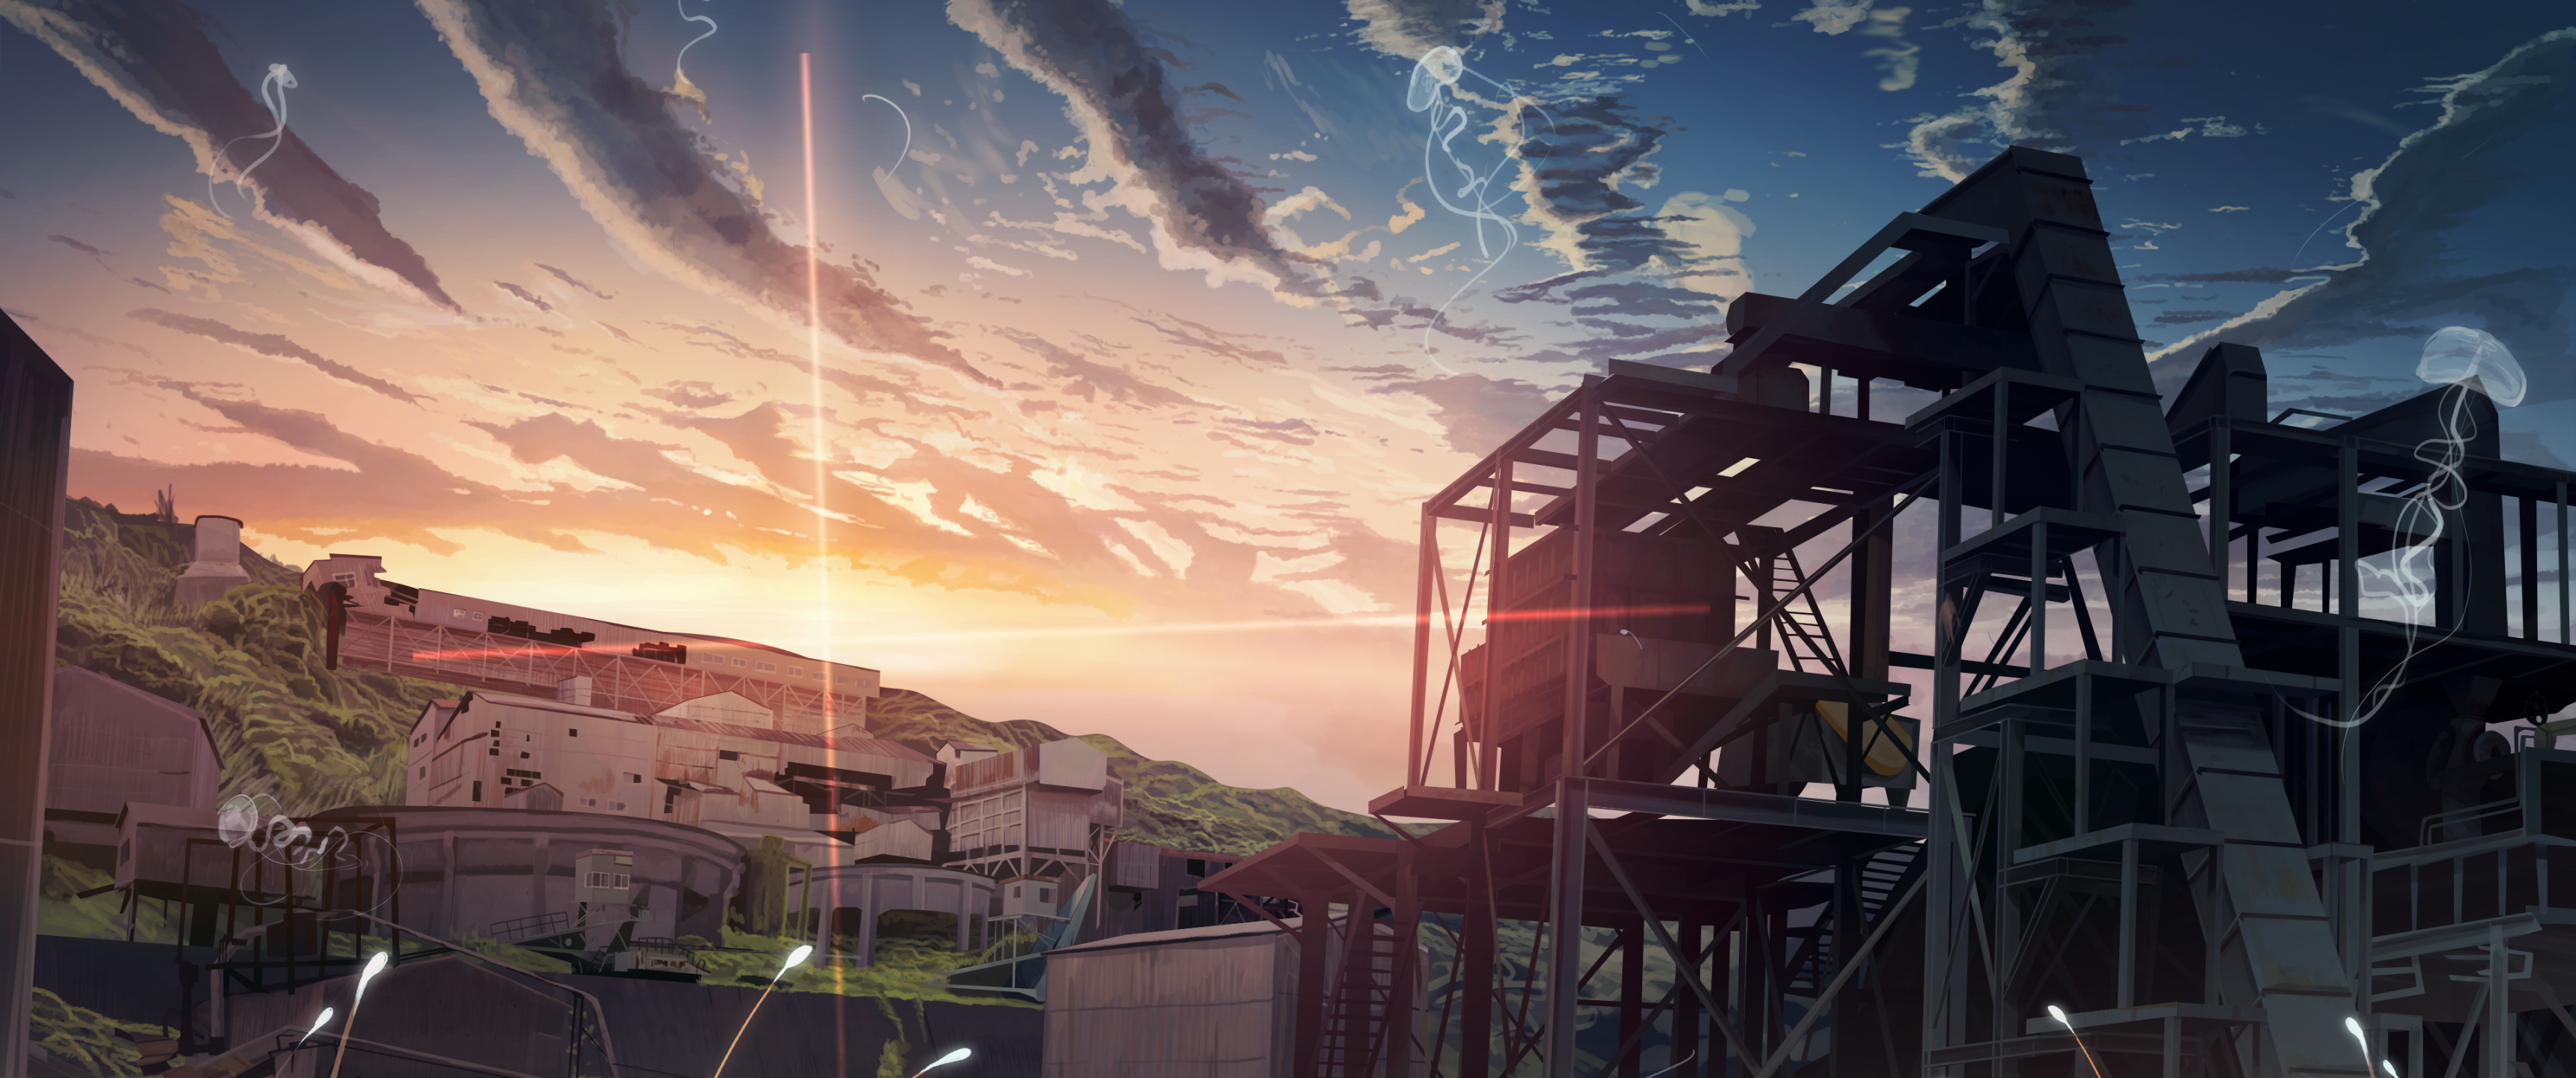 Download 3440x1440 Anime Landscape, Sunset, Clouds Wallpaper